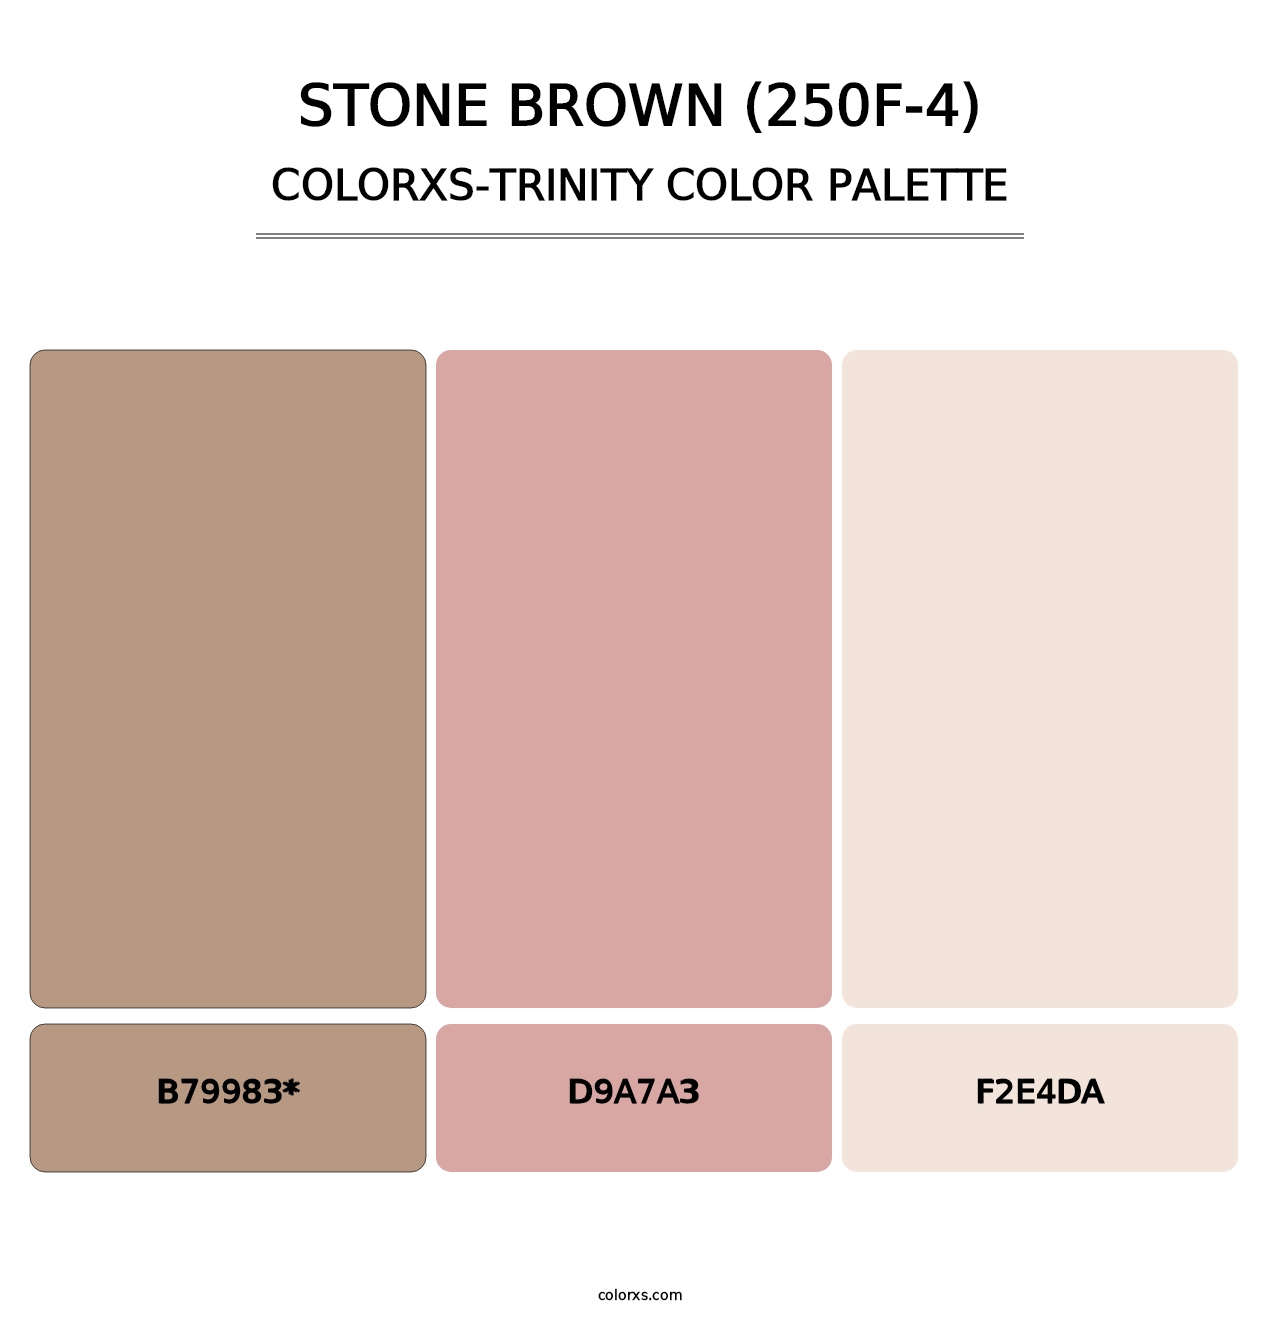 Stone Brown (250F-4) - Colorxs Trinity Palette